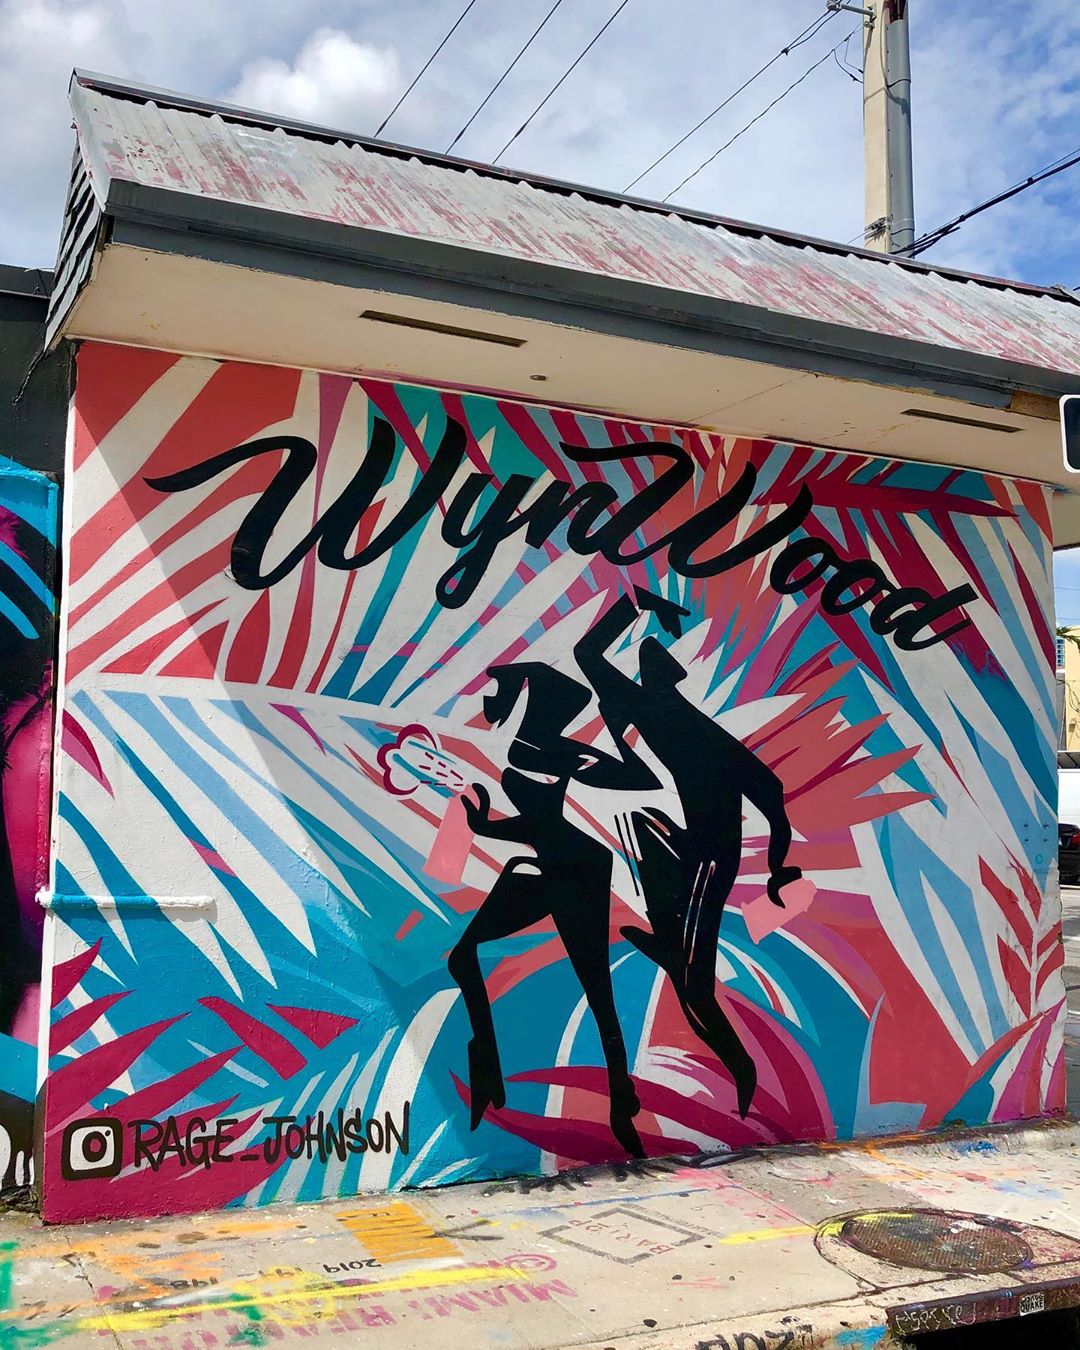 mural in Miami by artist Rage Johnson.